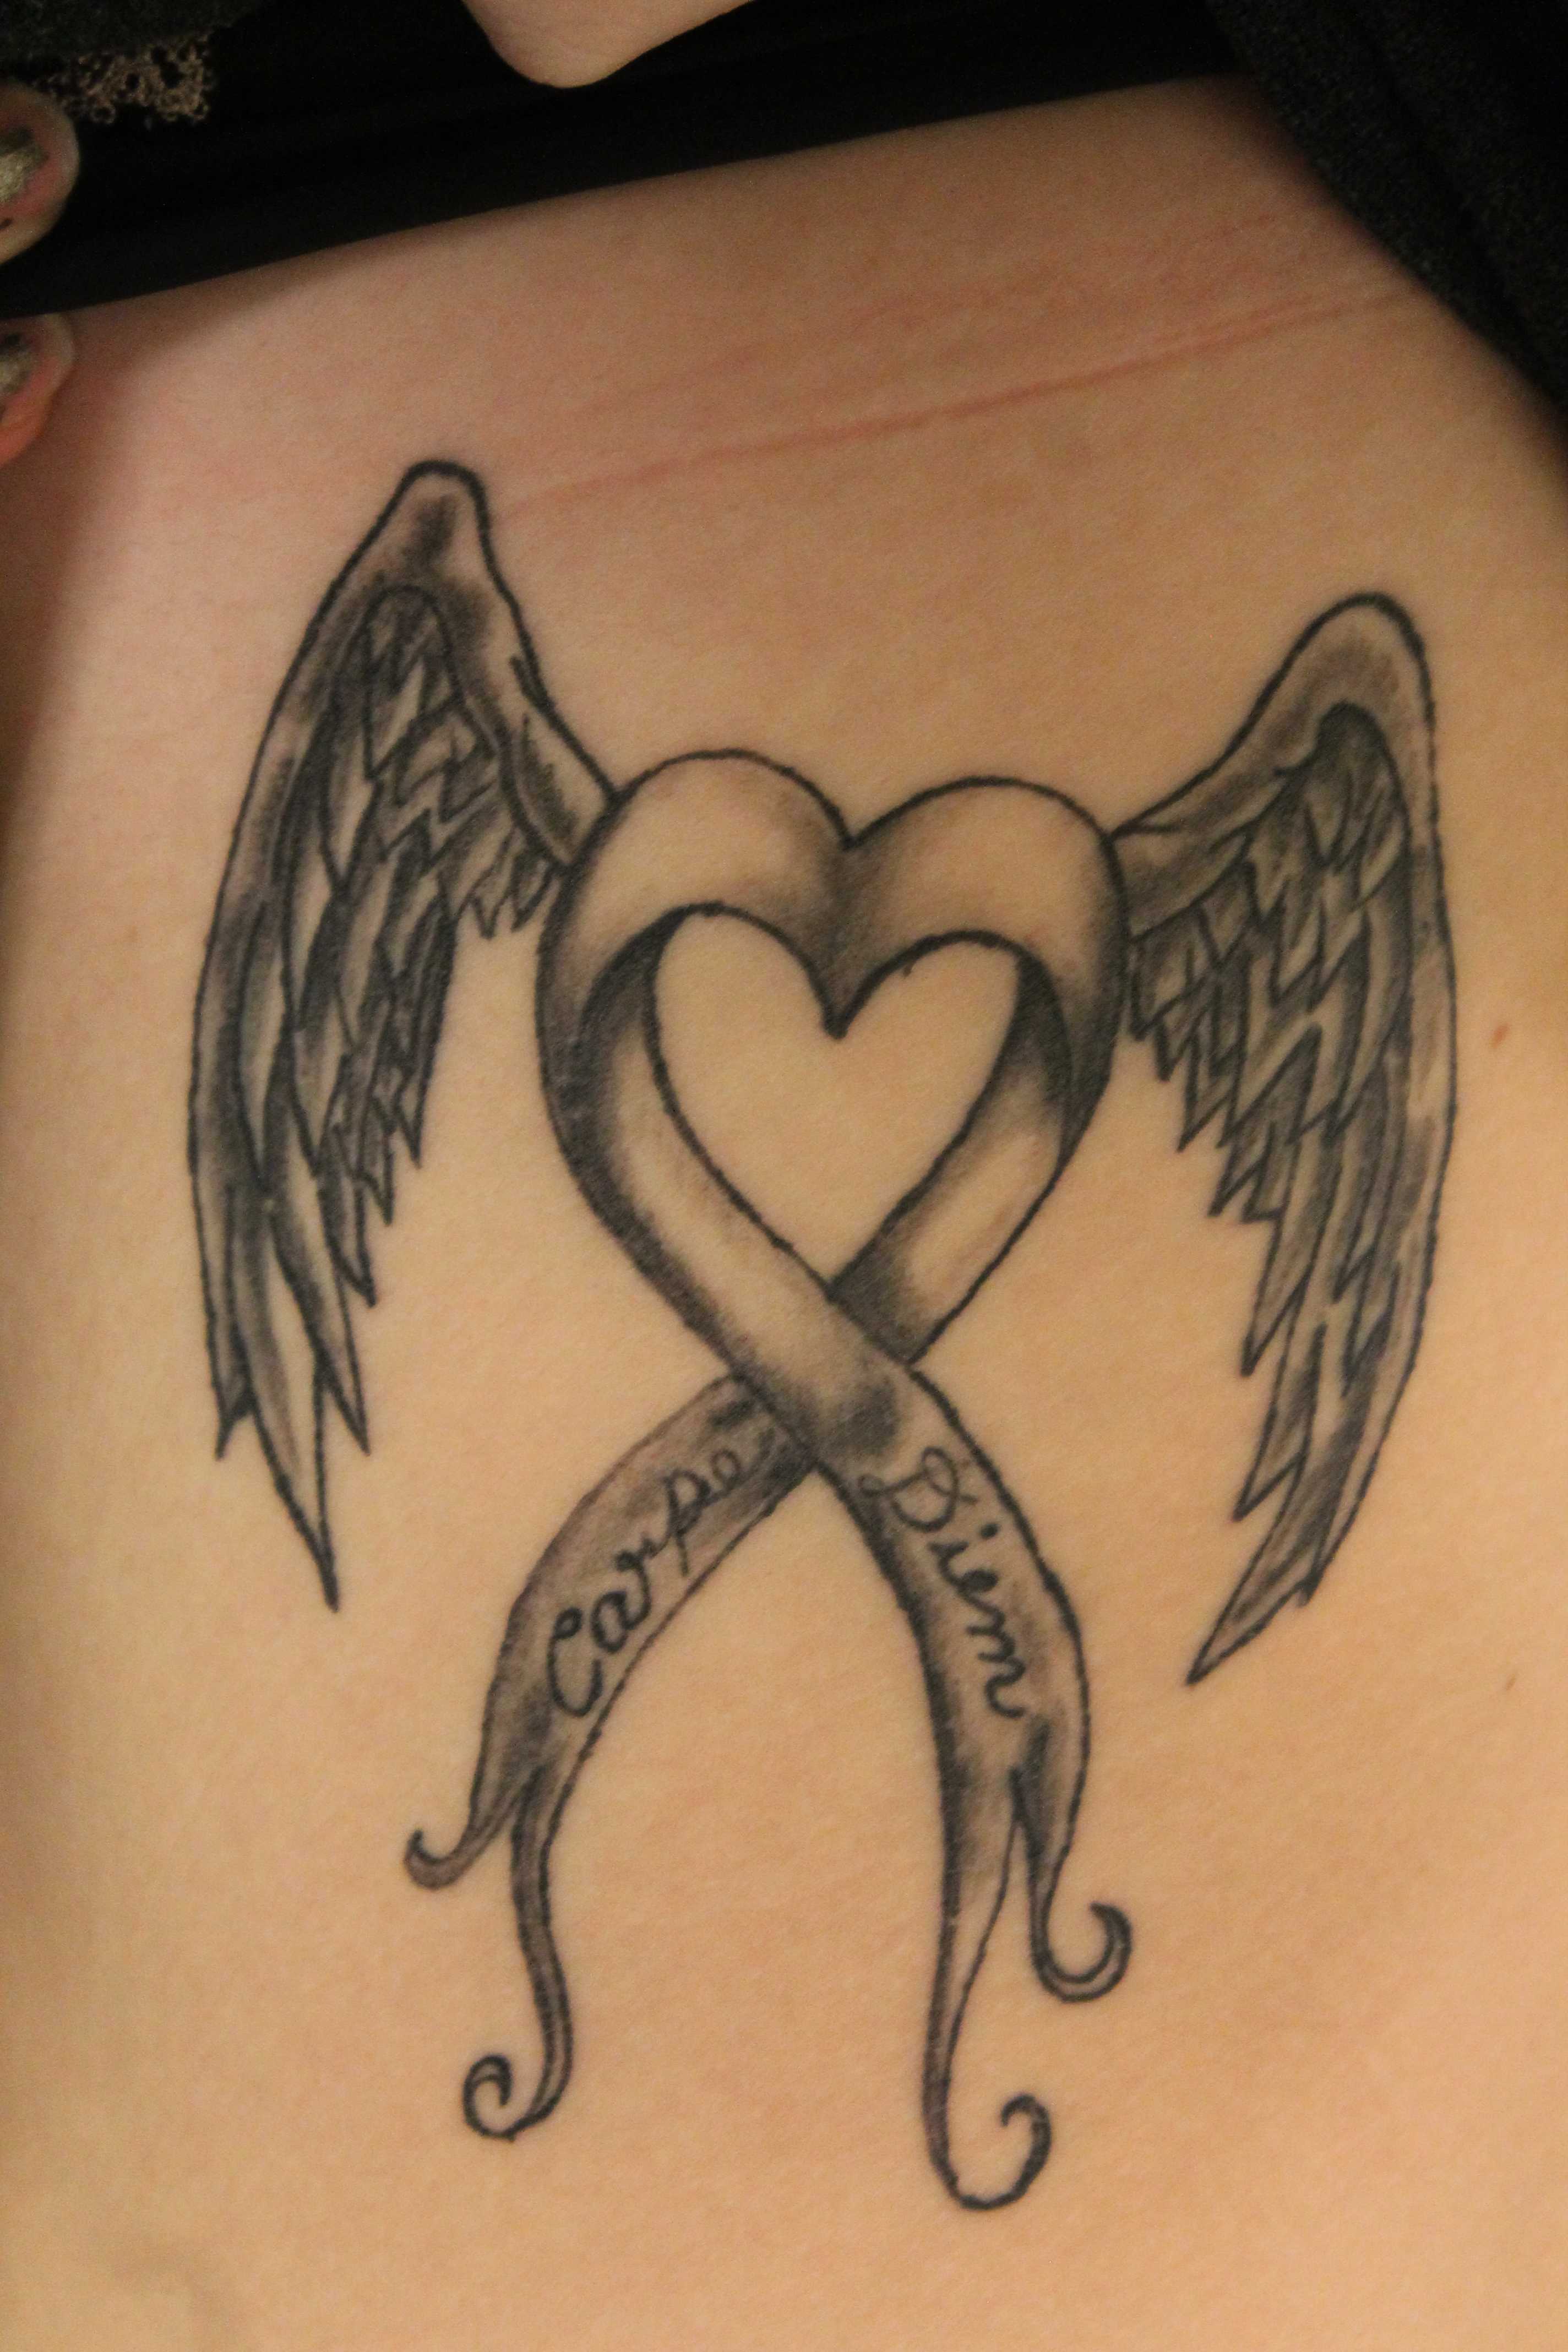 bladder cancer ribbon tattoo